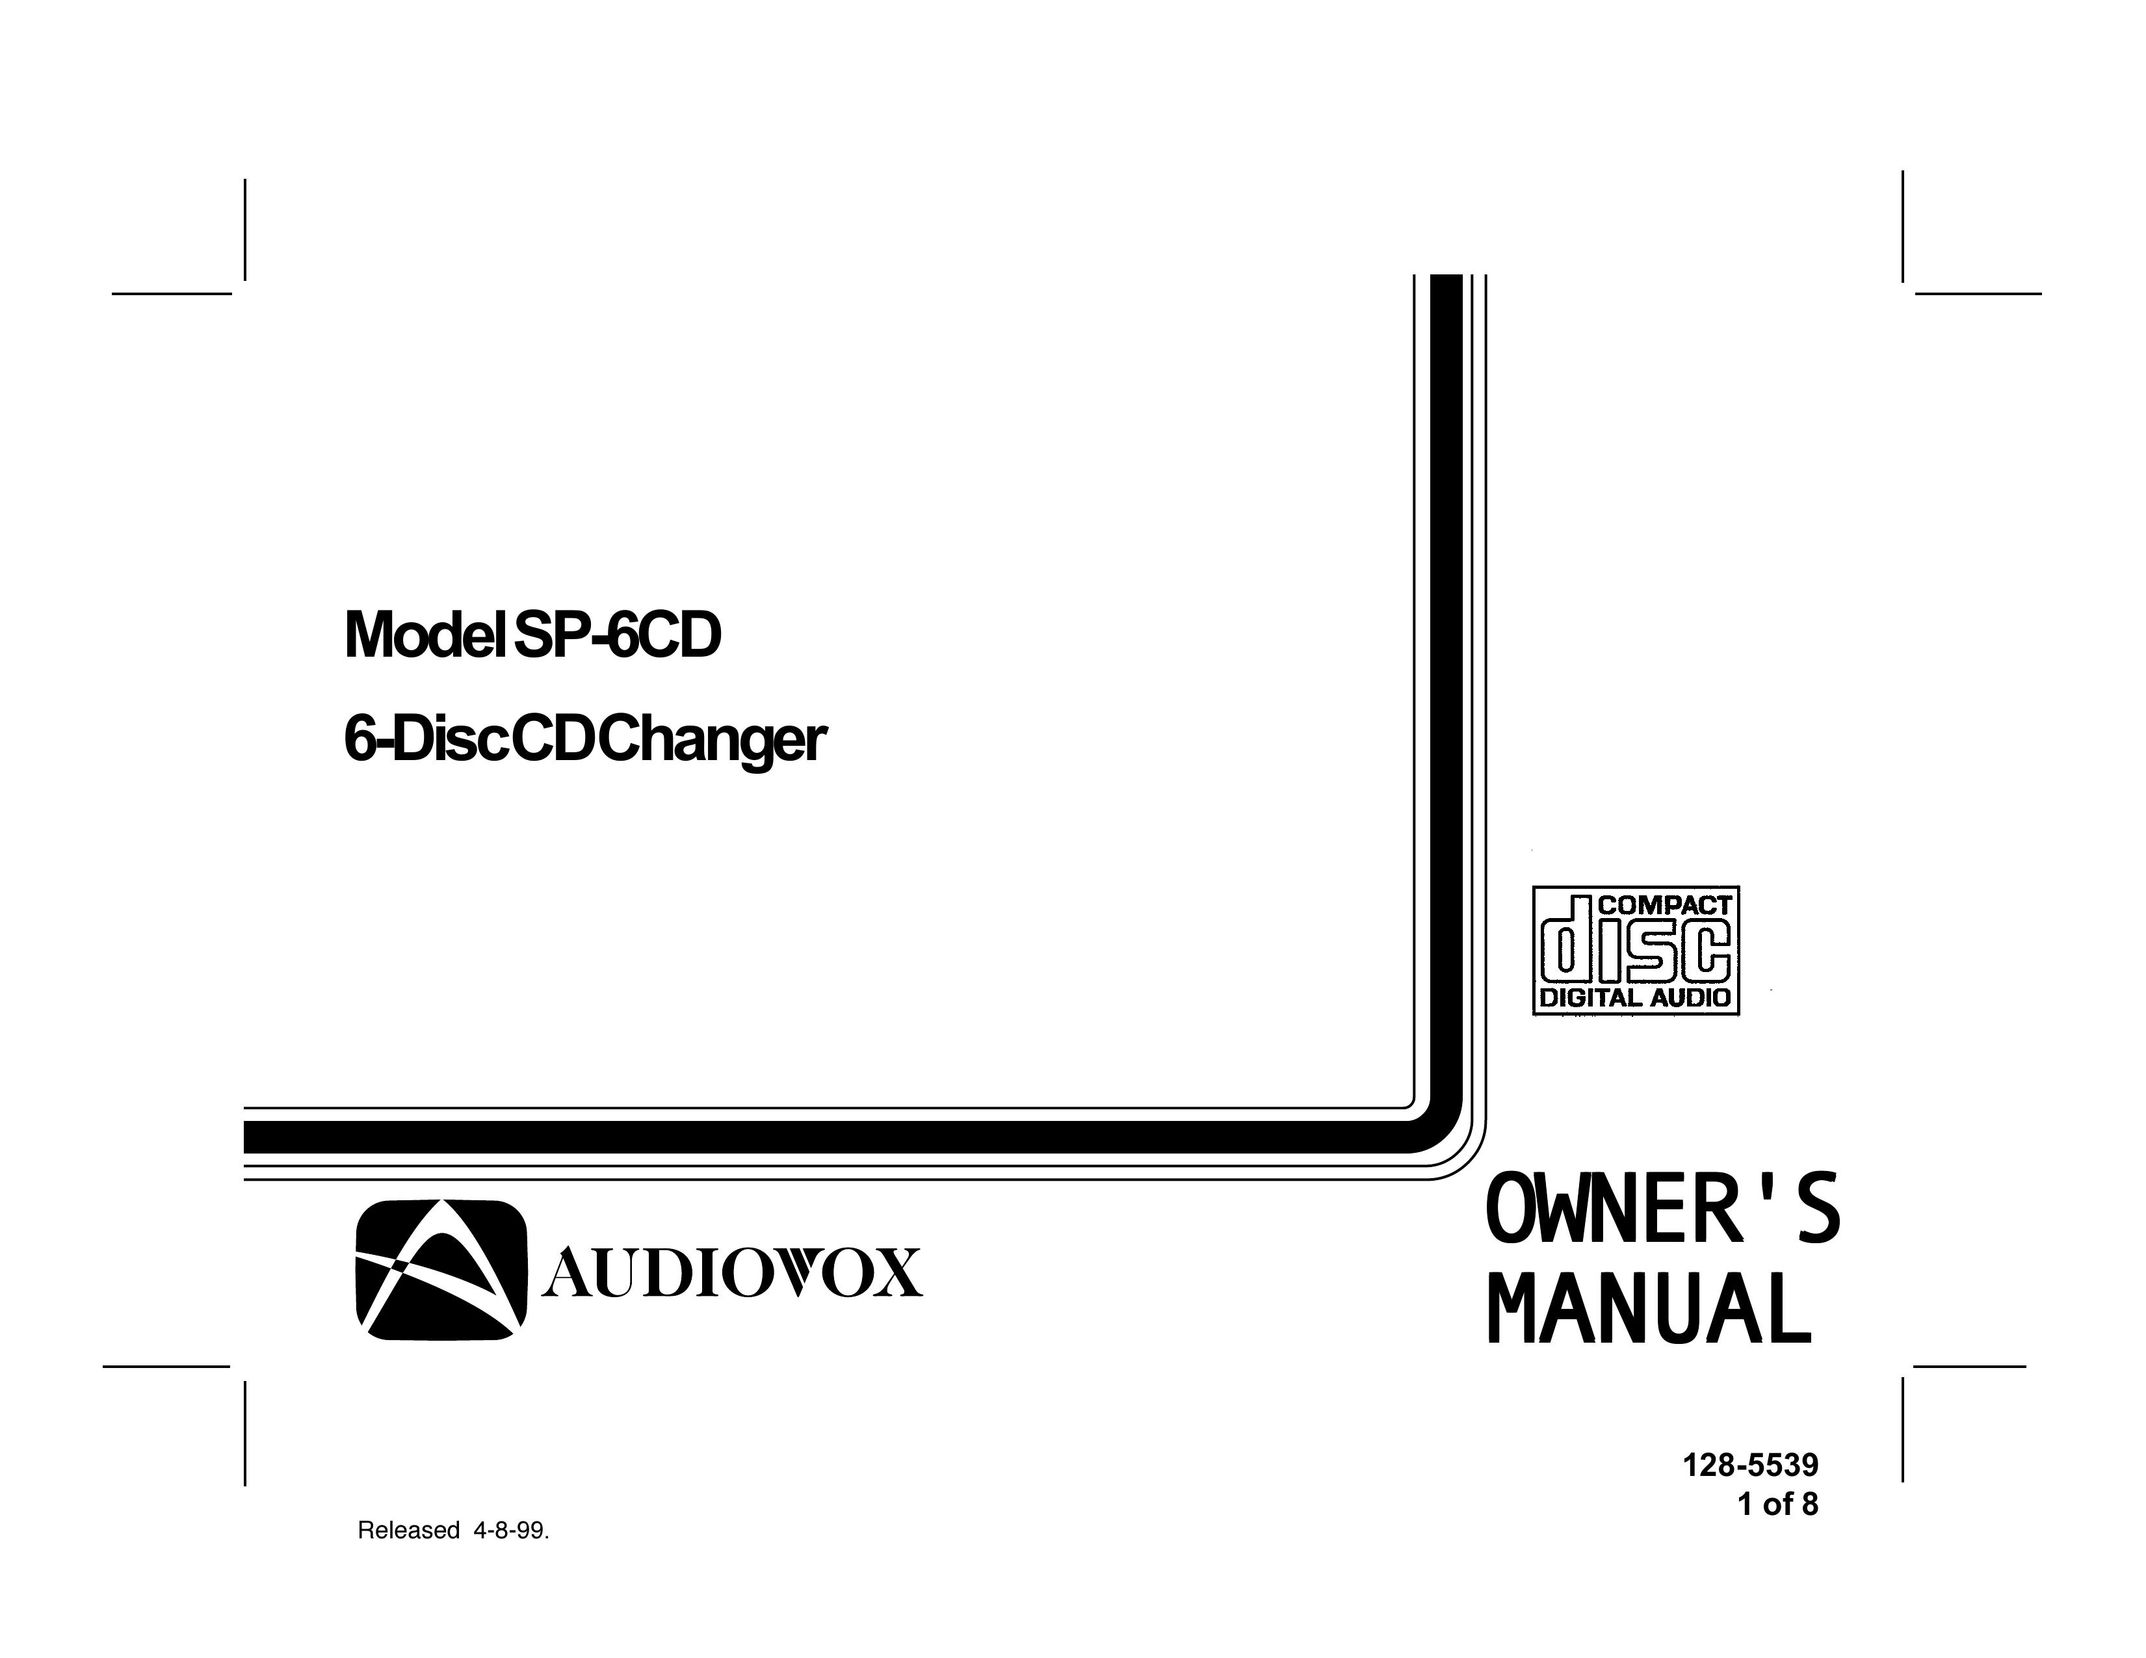 Audiovox SP-6CD CD Player User Manual